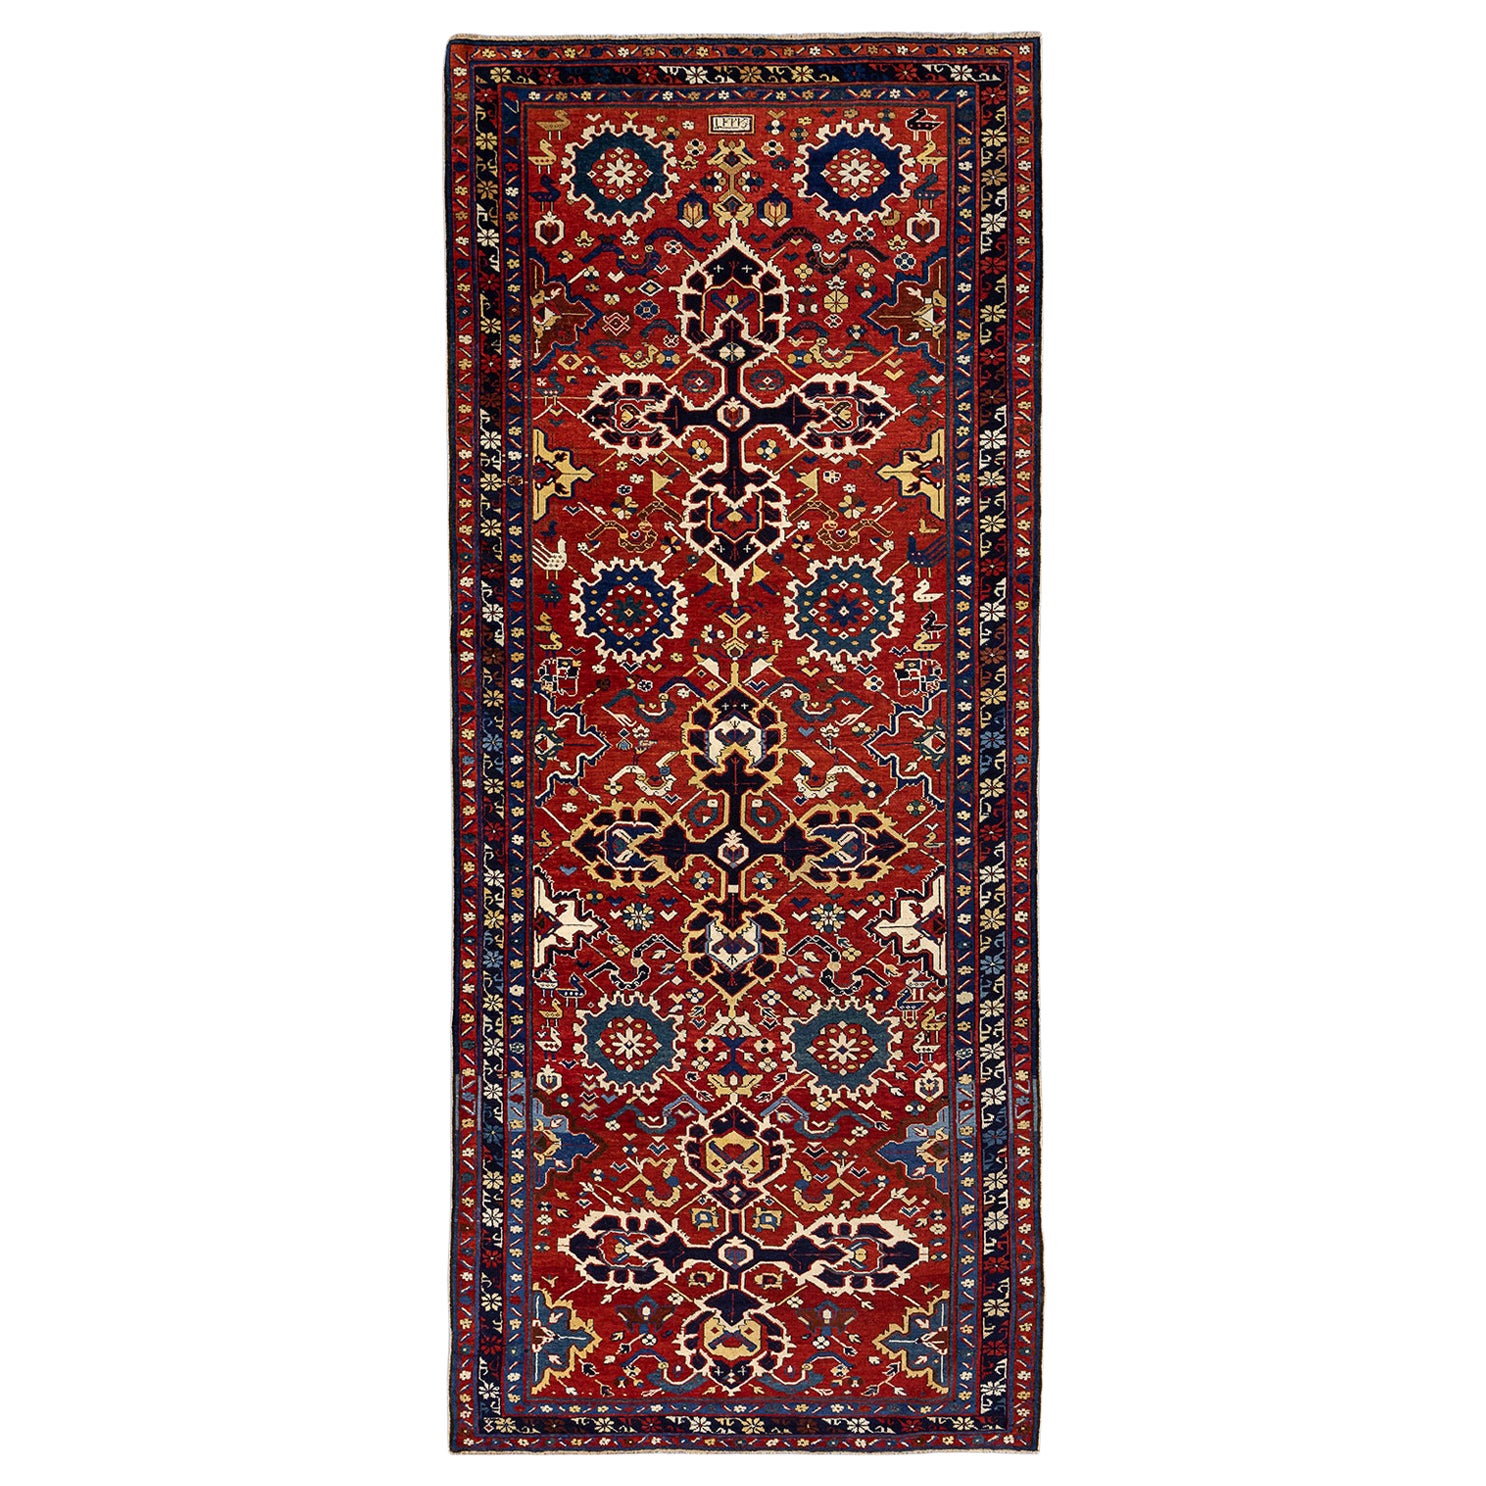 Caucasian Kuba (Quba) Dated Carpet early 19th Century